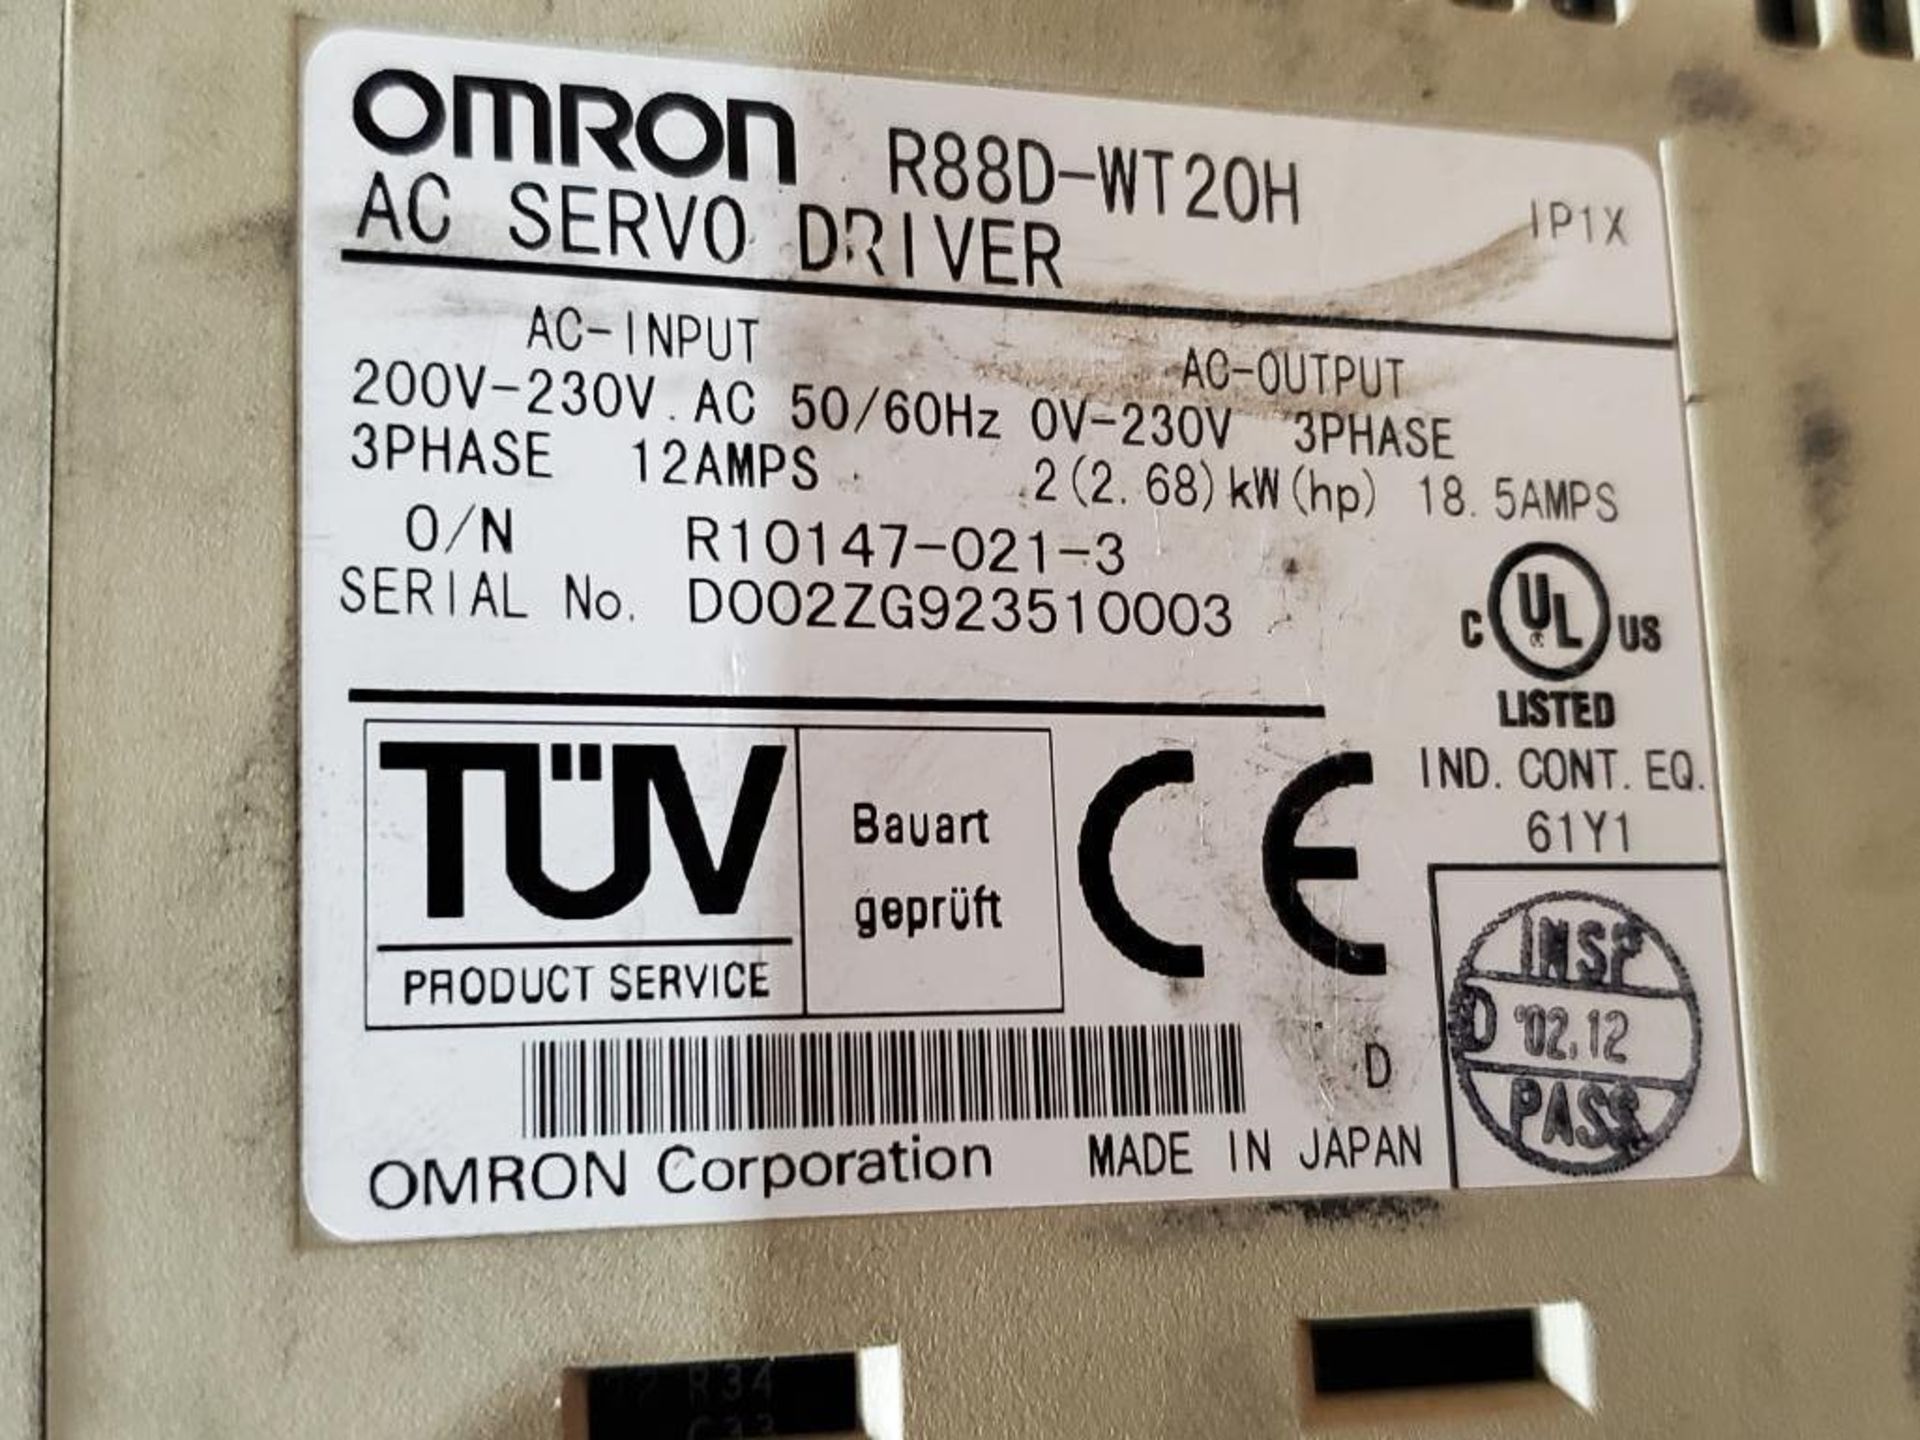 2.68HP Omron AC servo driver. R88D-WT20H. - Image 5 of 6